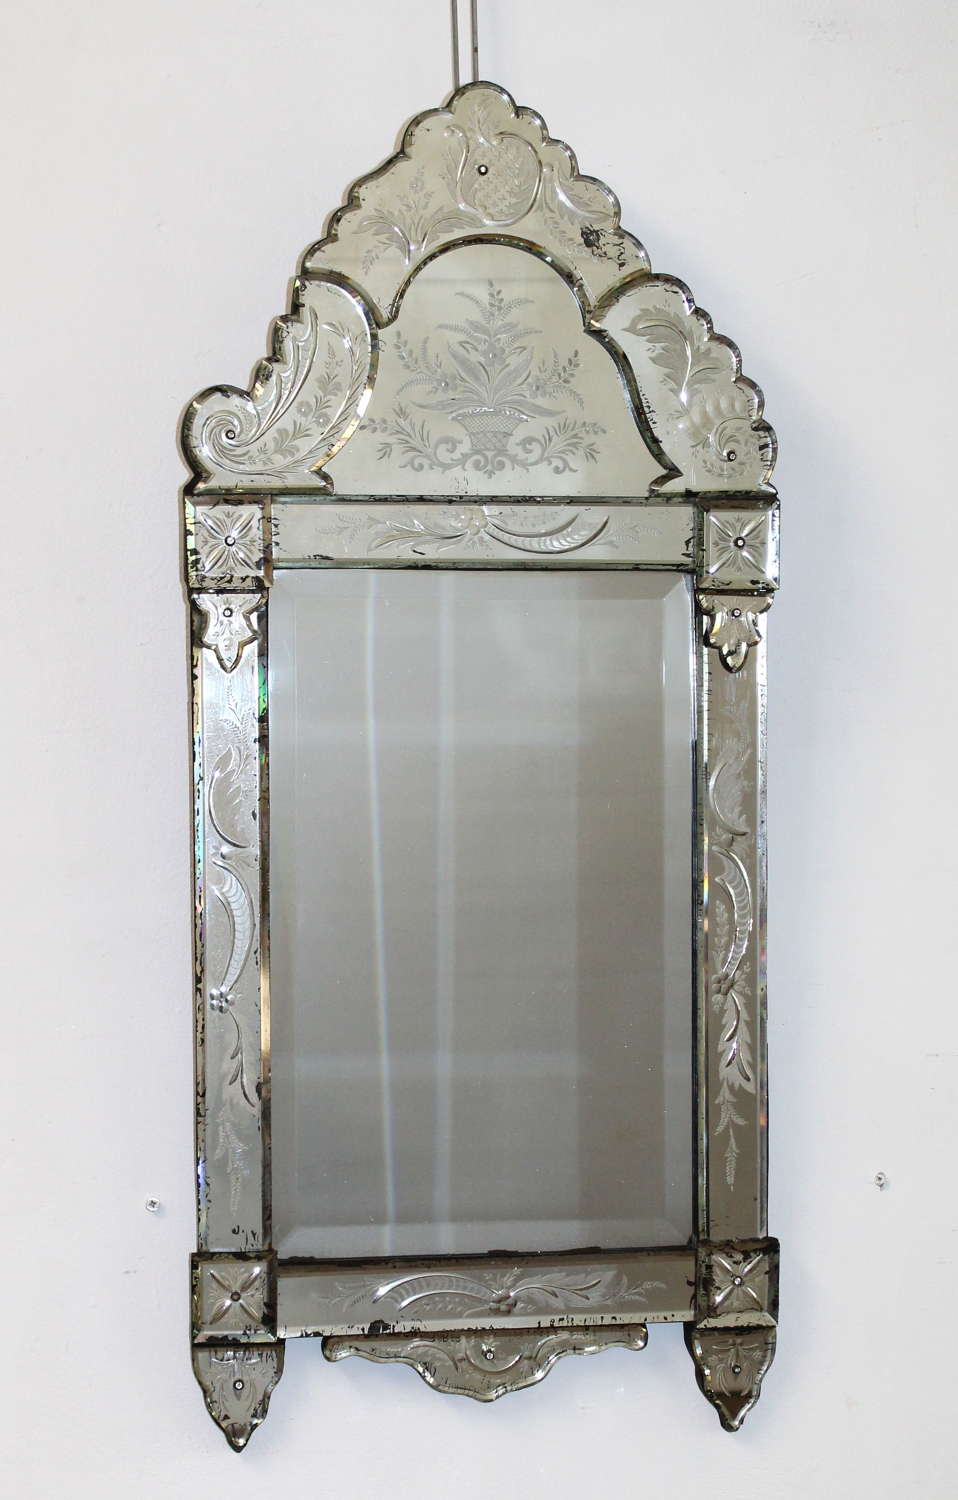 Small decorative antique Venetian pier mirror